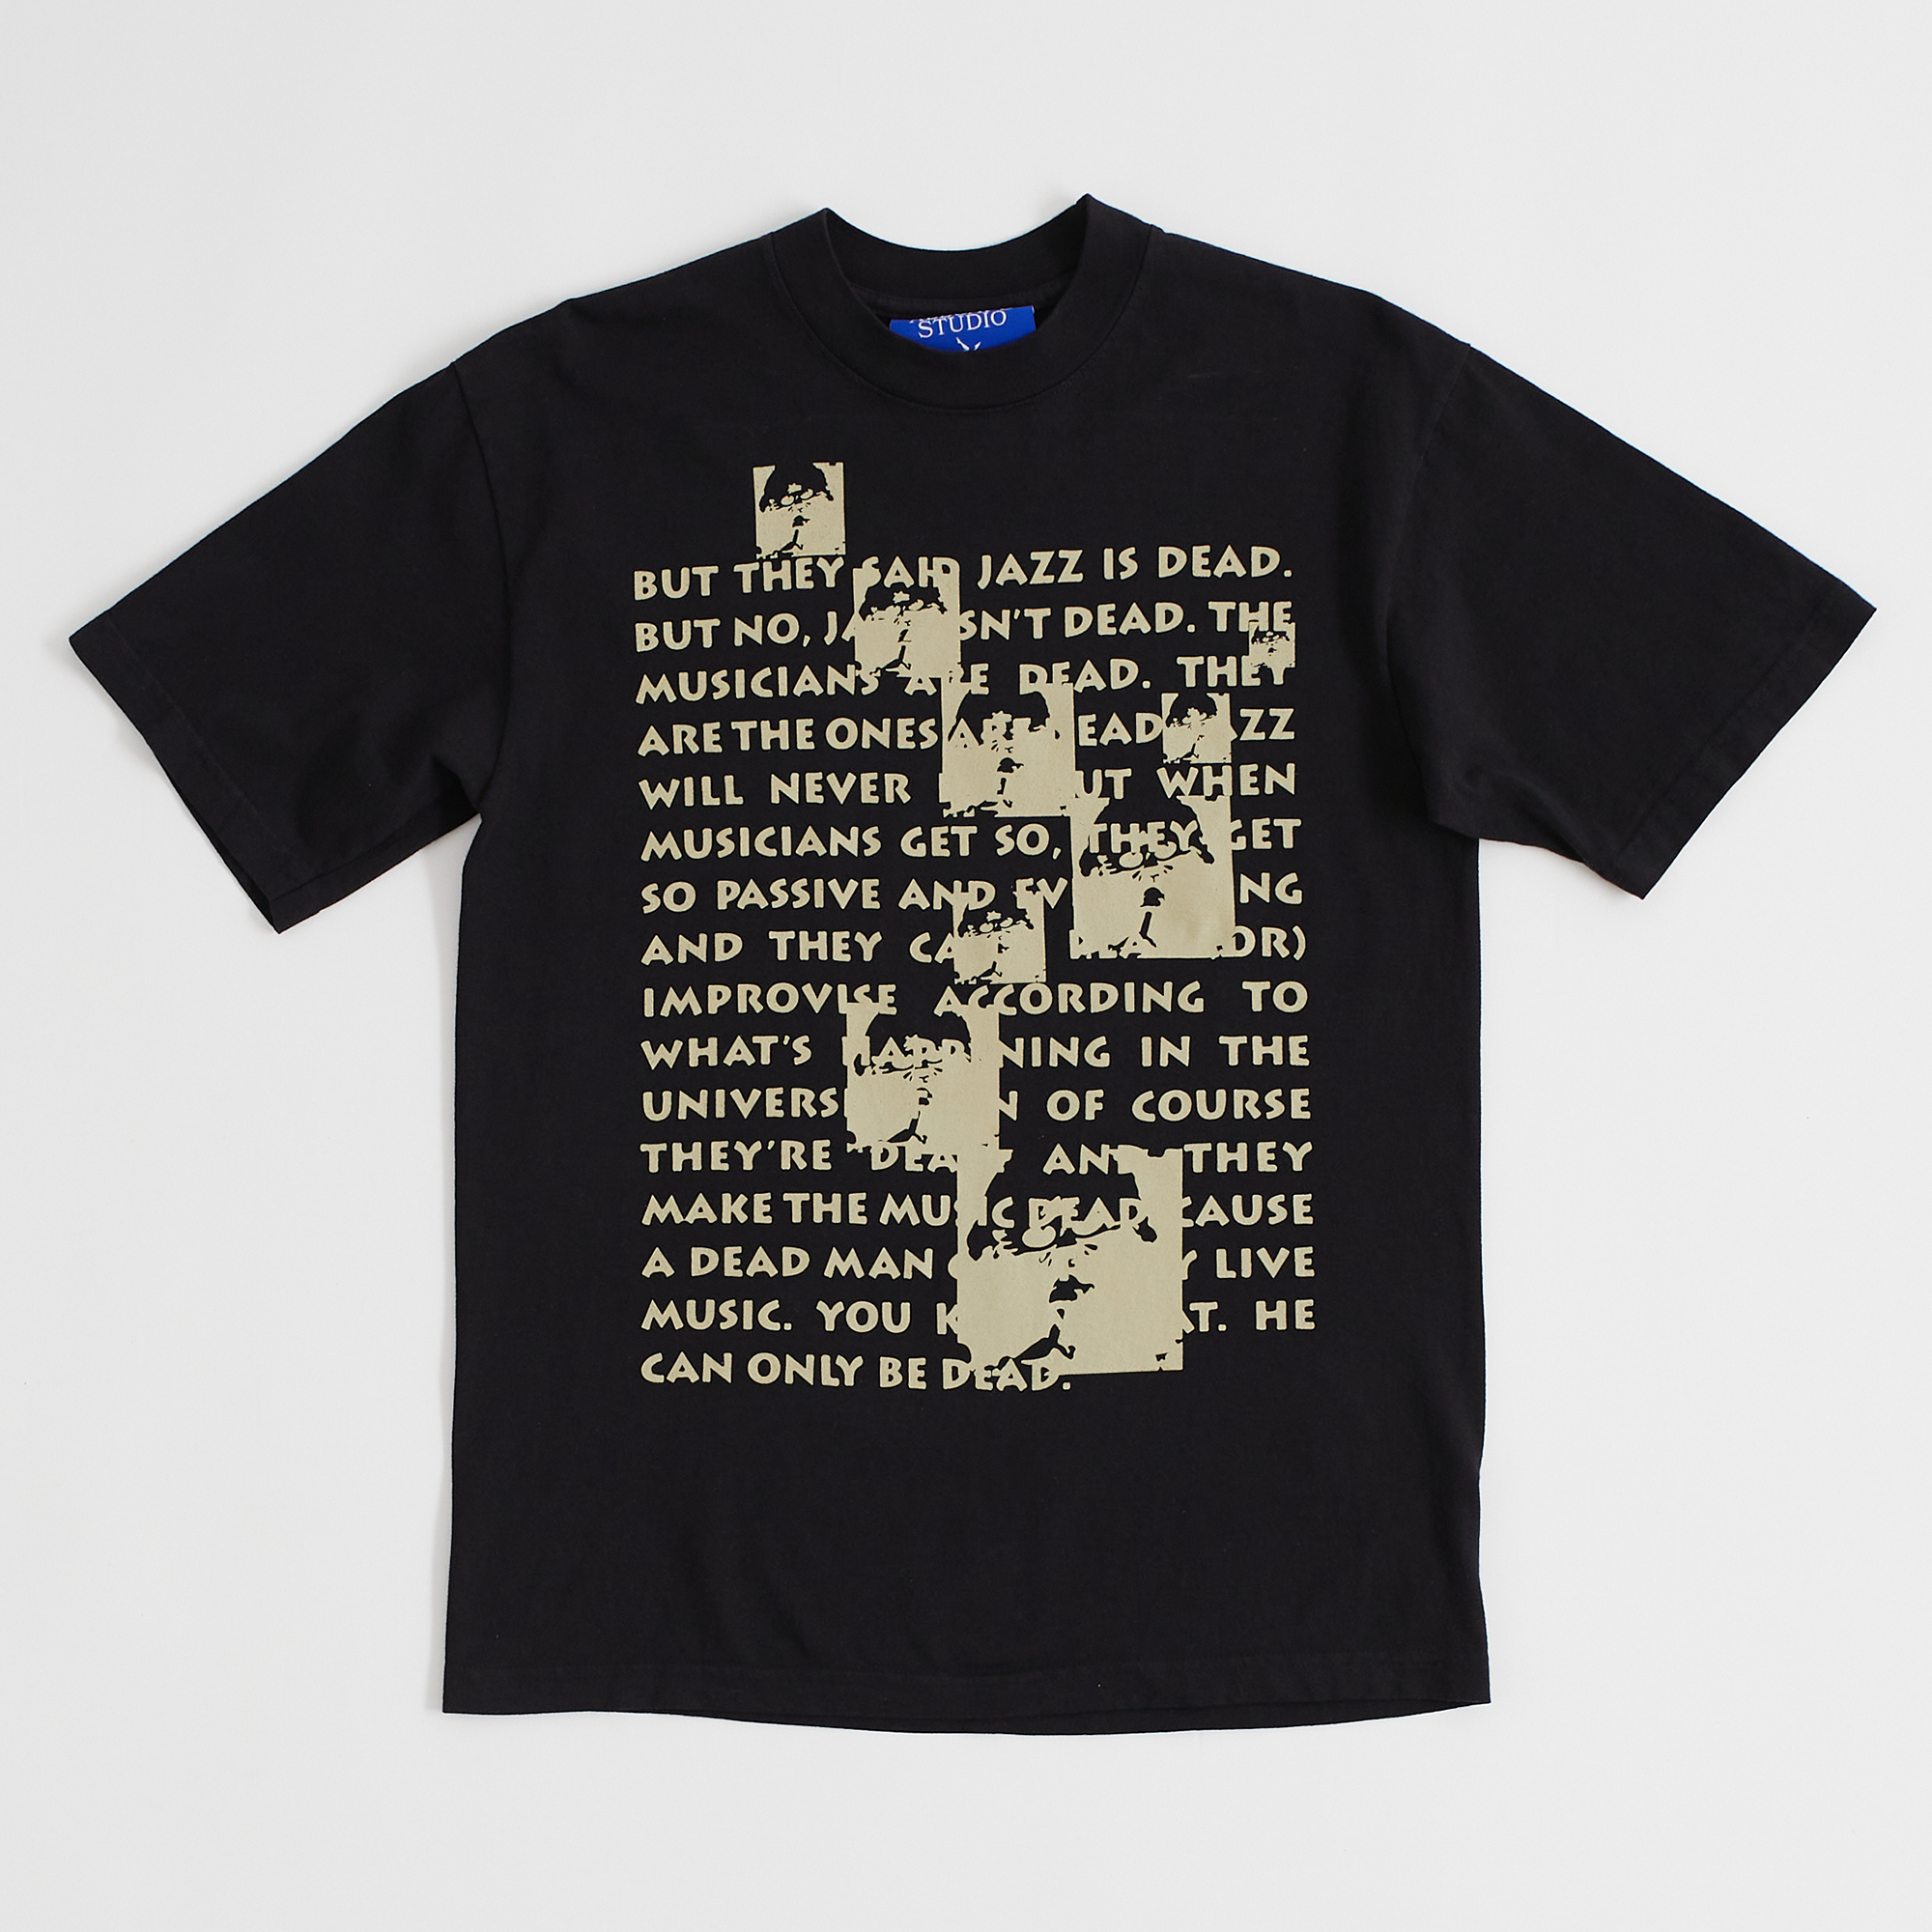 Sun Ra Research S/S T-Shirt (Black)